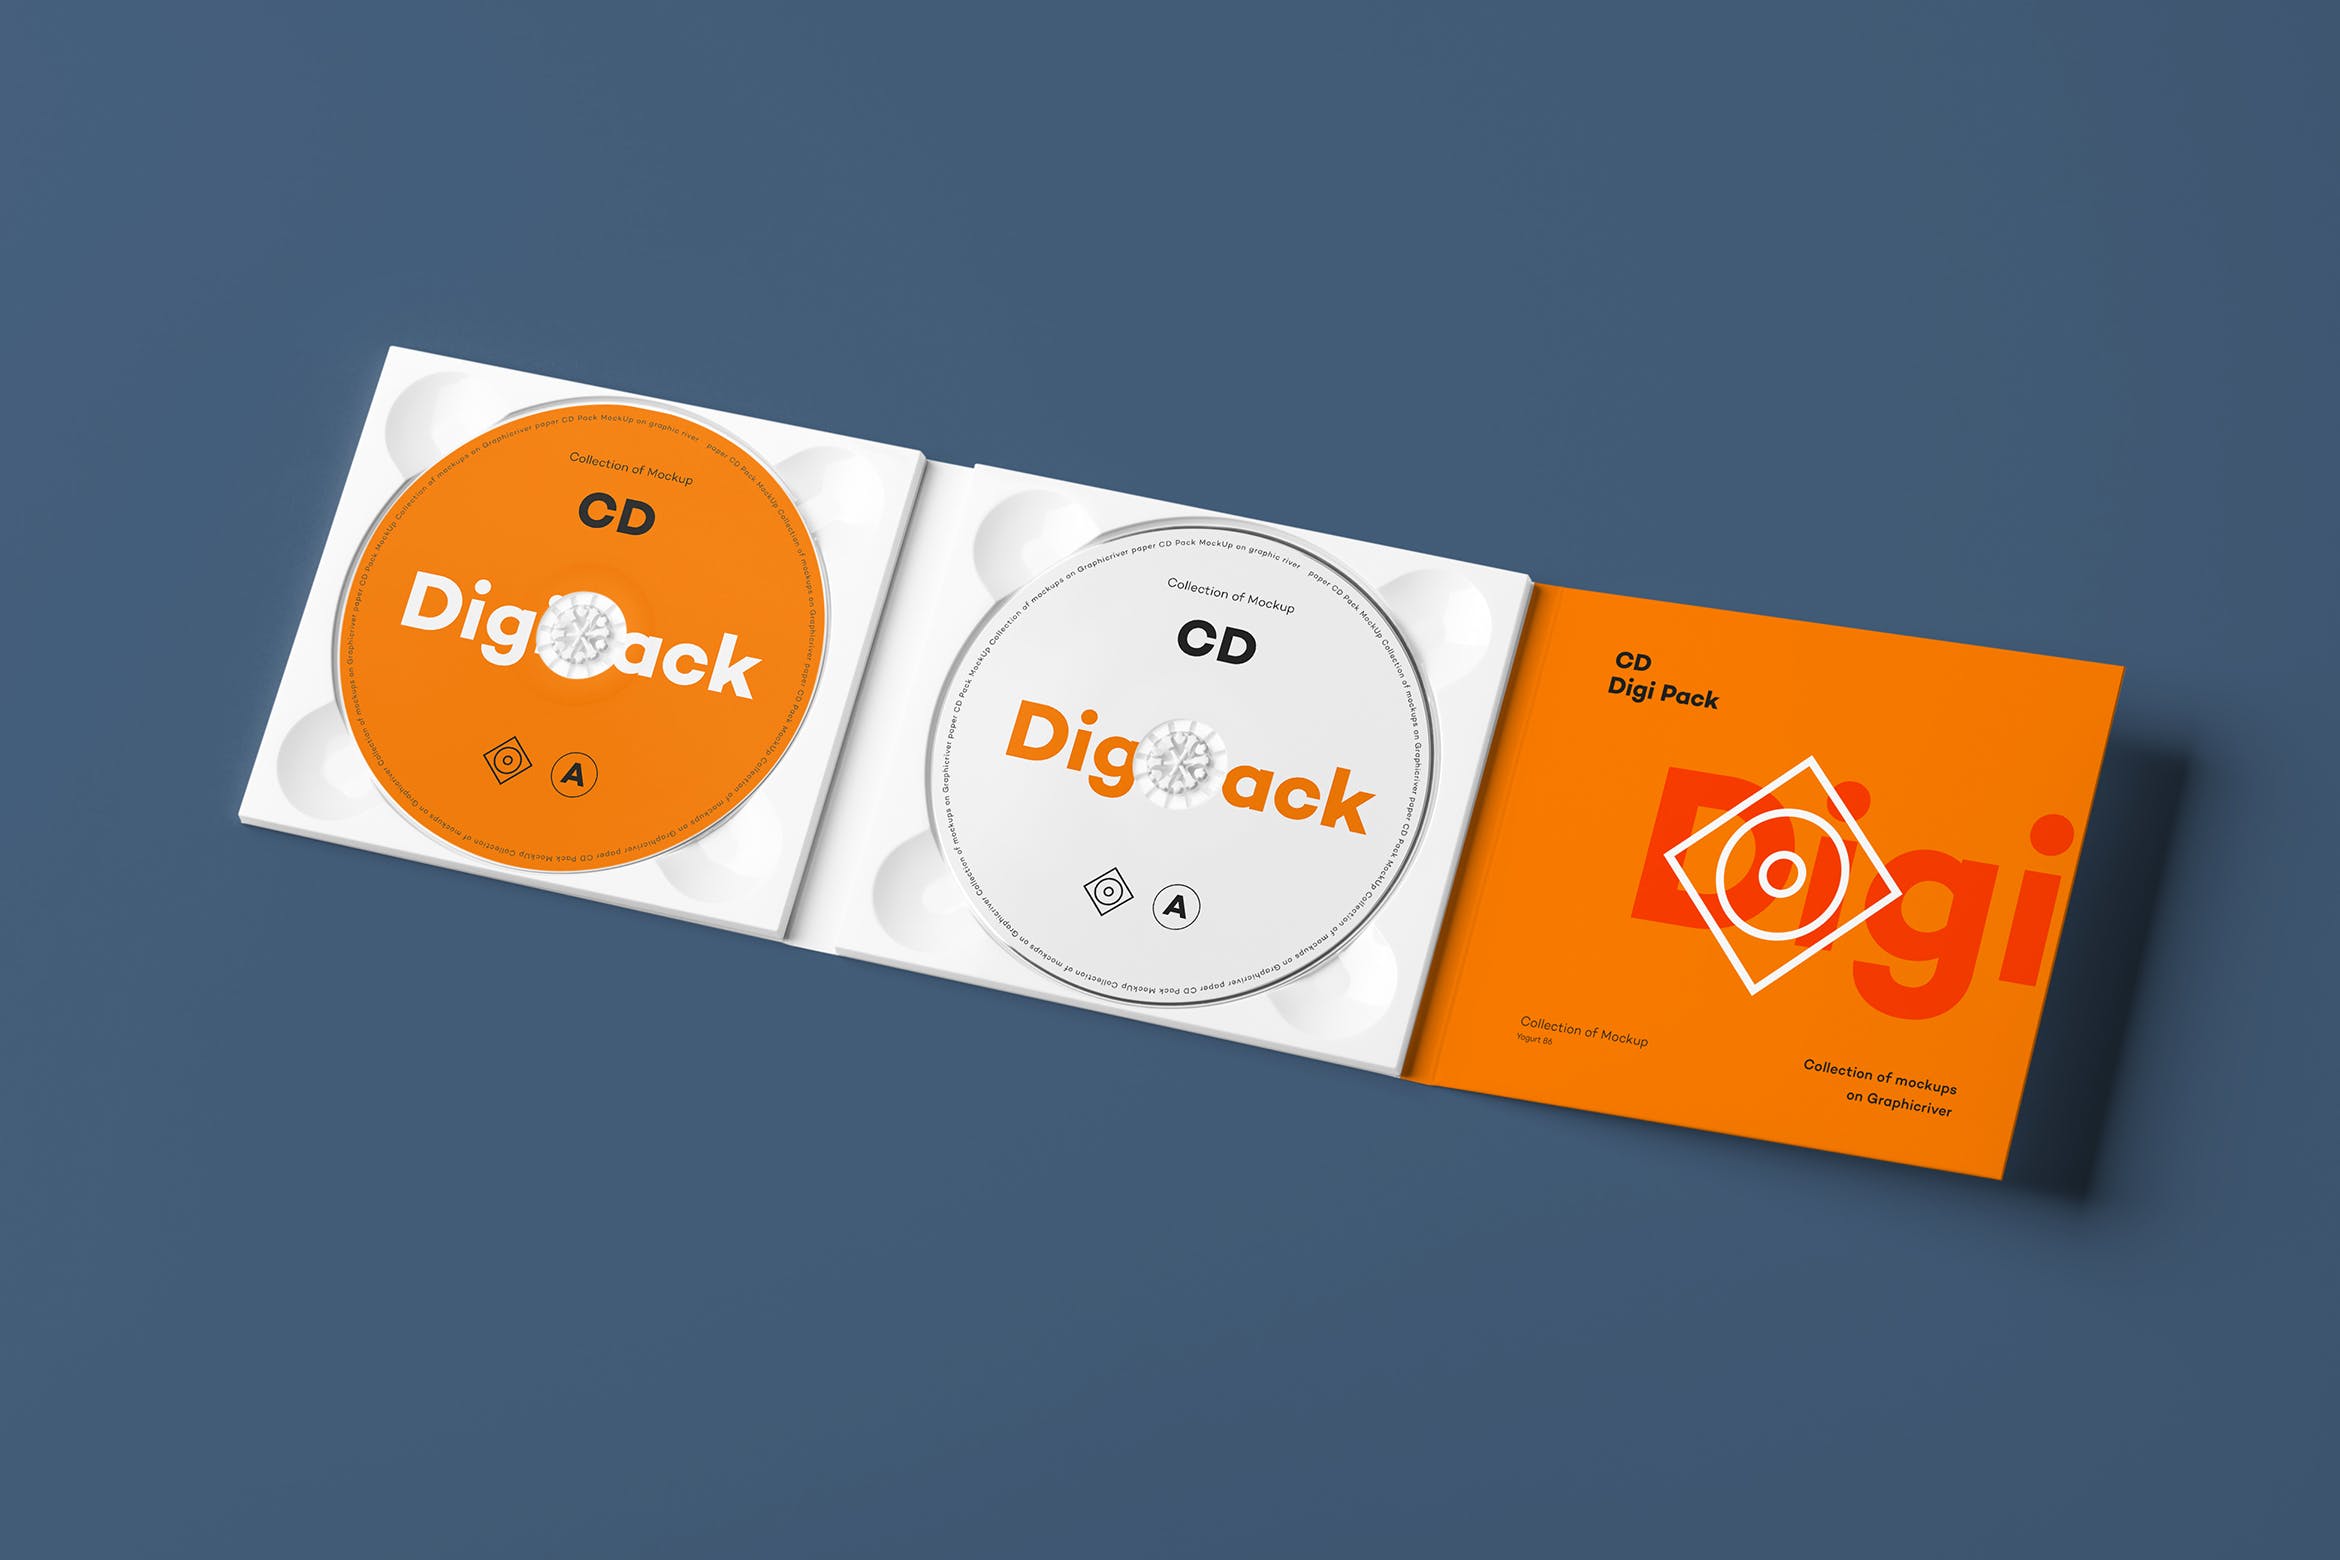 CD光碟封面&包装盒设计图16设计网精选模板v8 CD Digi Pack Mock-up 8插图